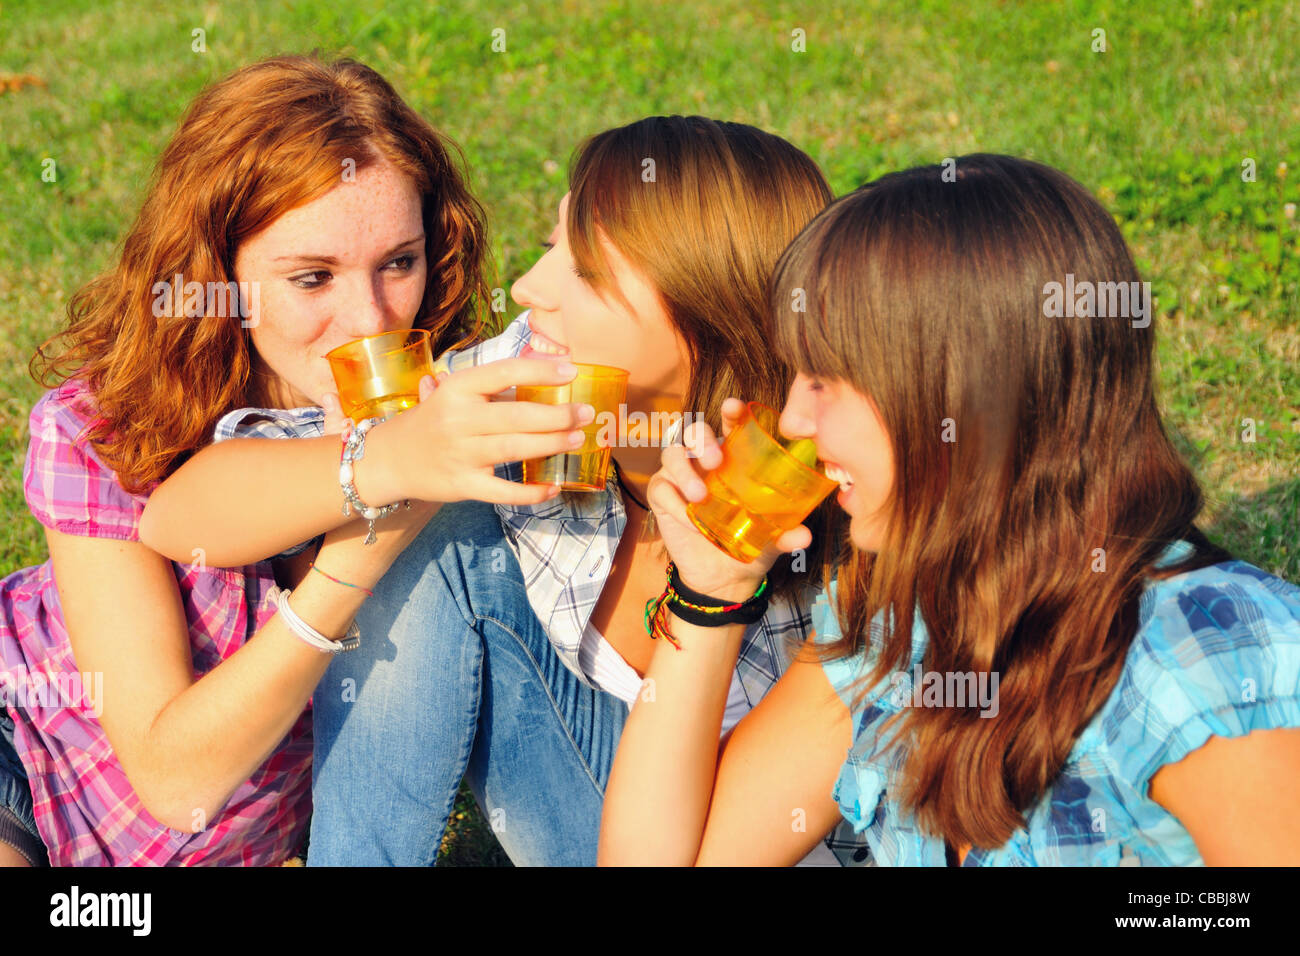 Teenage girls picnicking in rural field Stock Photo